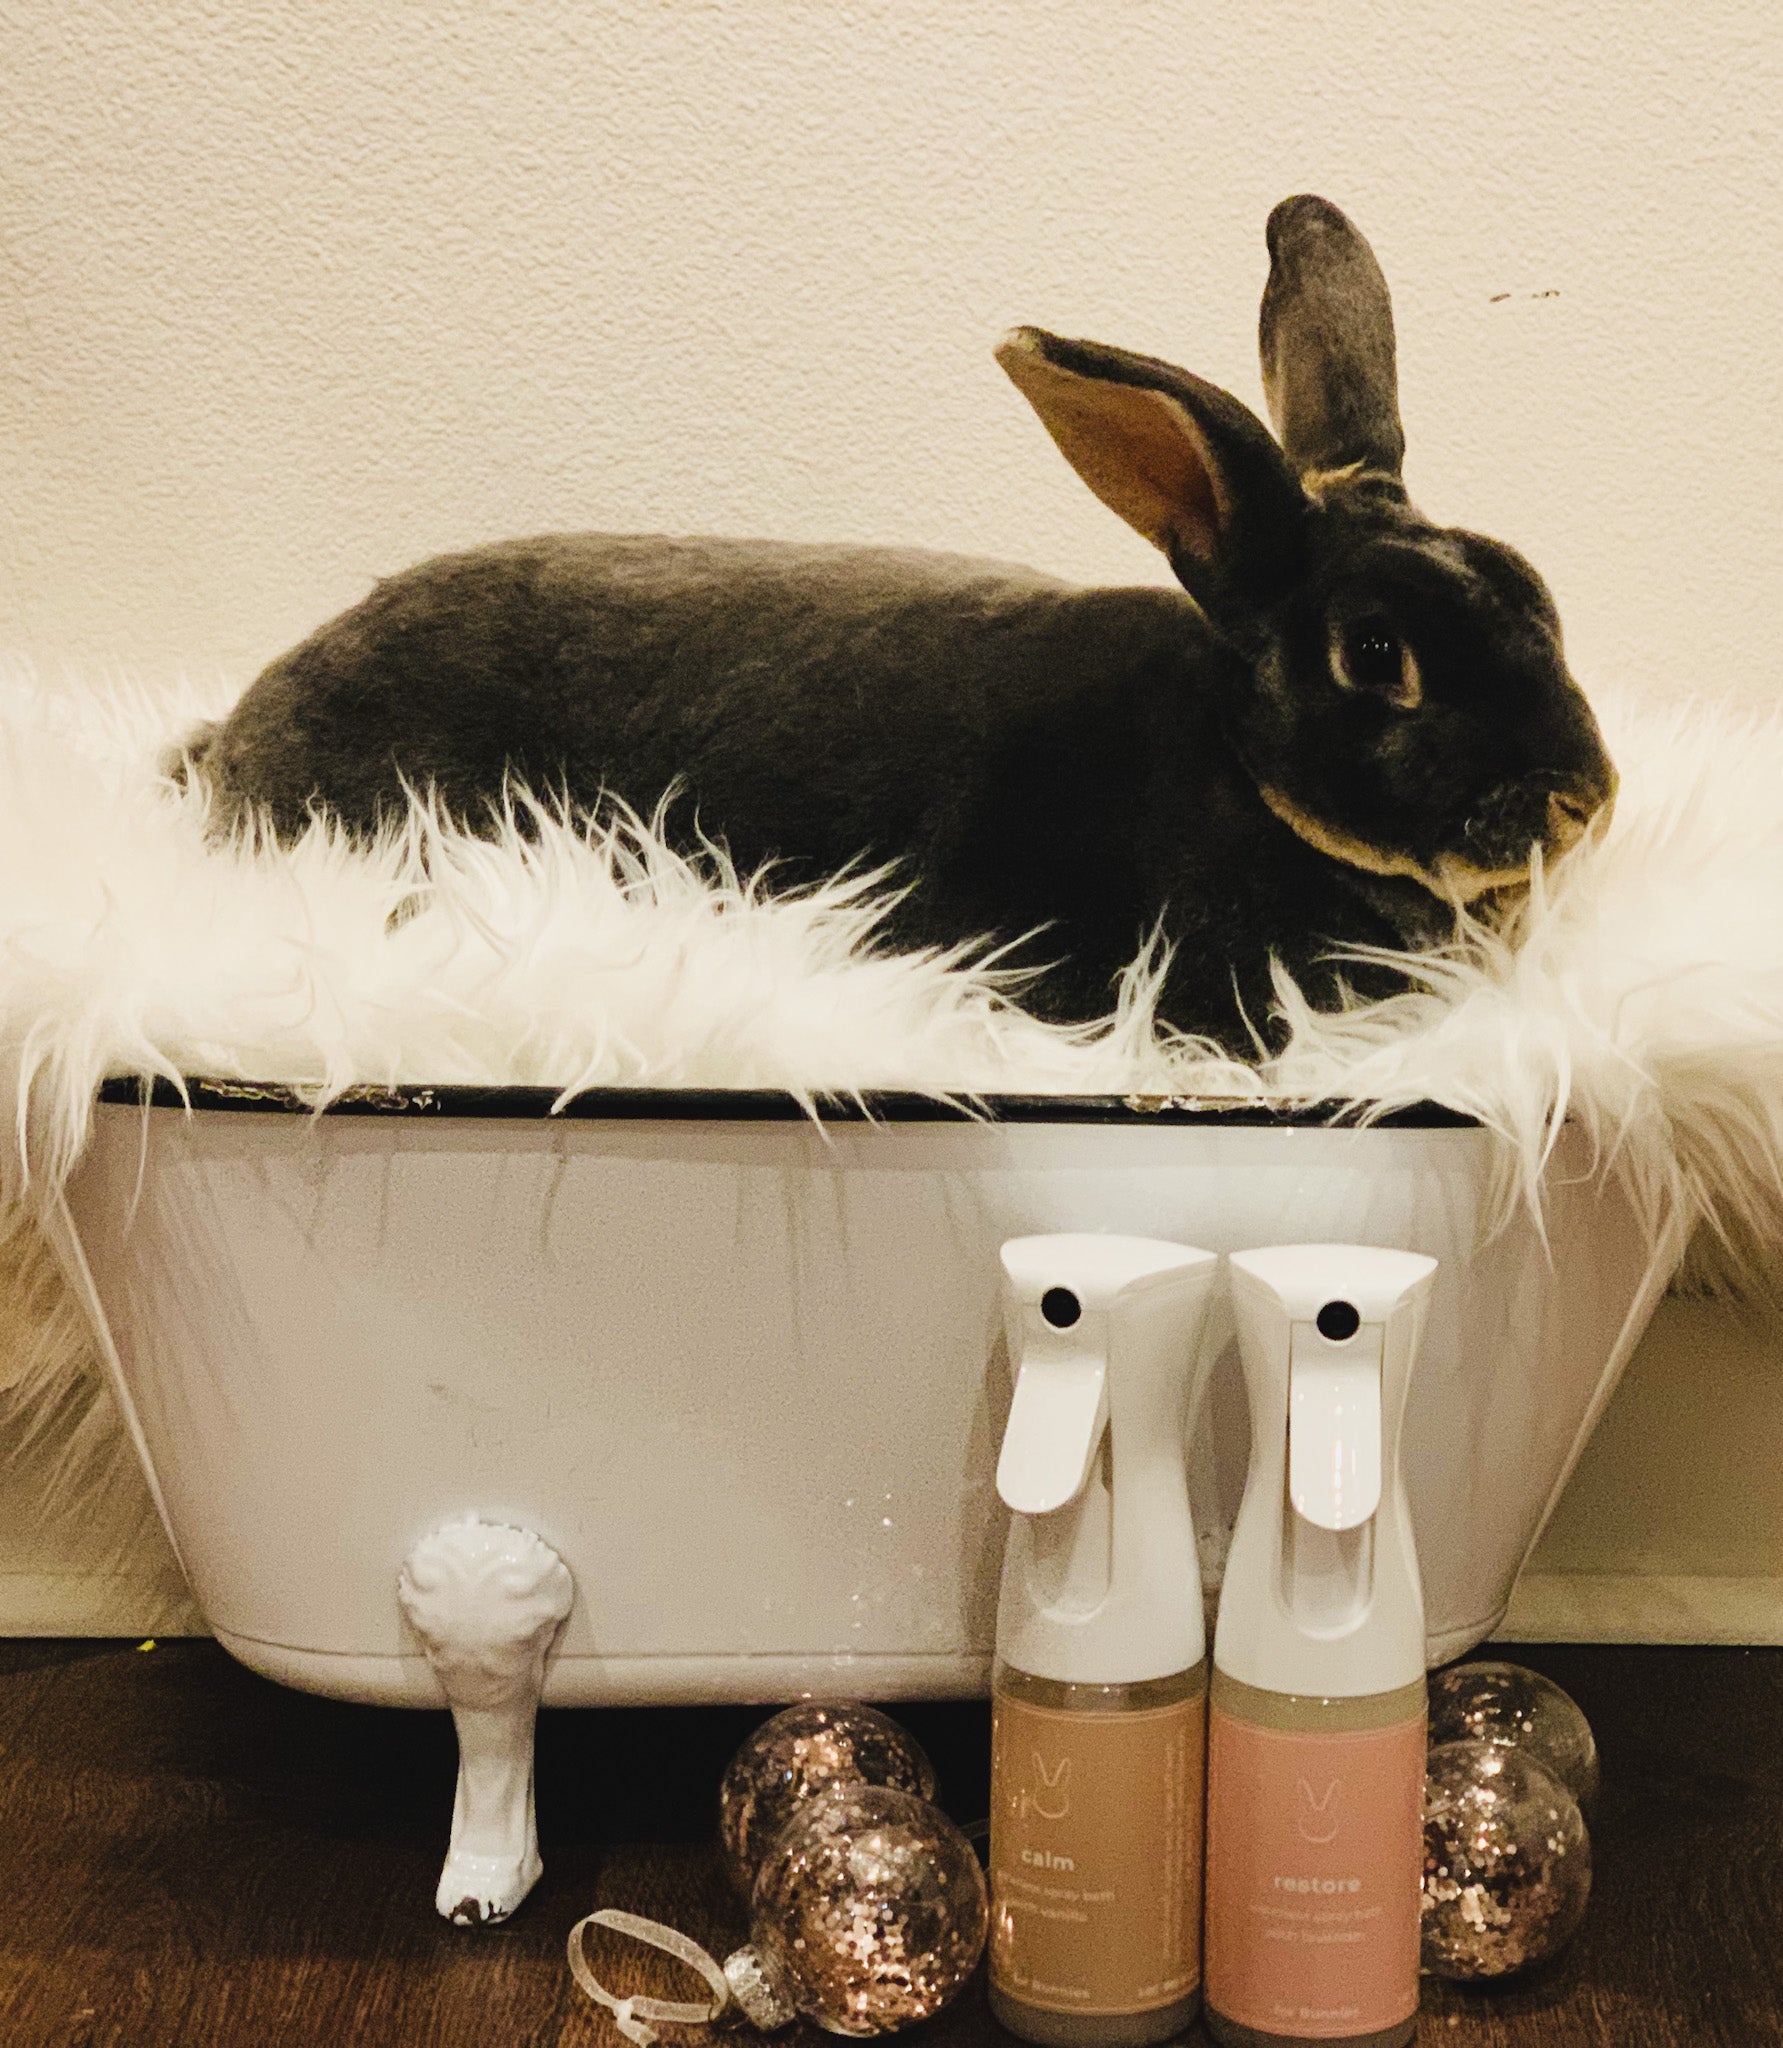 Restore Bunny, No Rinse, Waterless Spray Bath  5.5 oz - PetPotion™